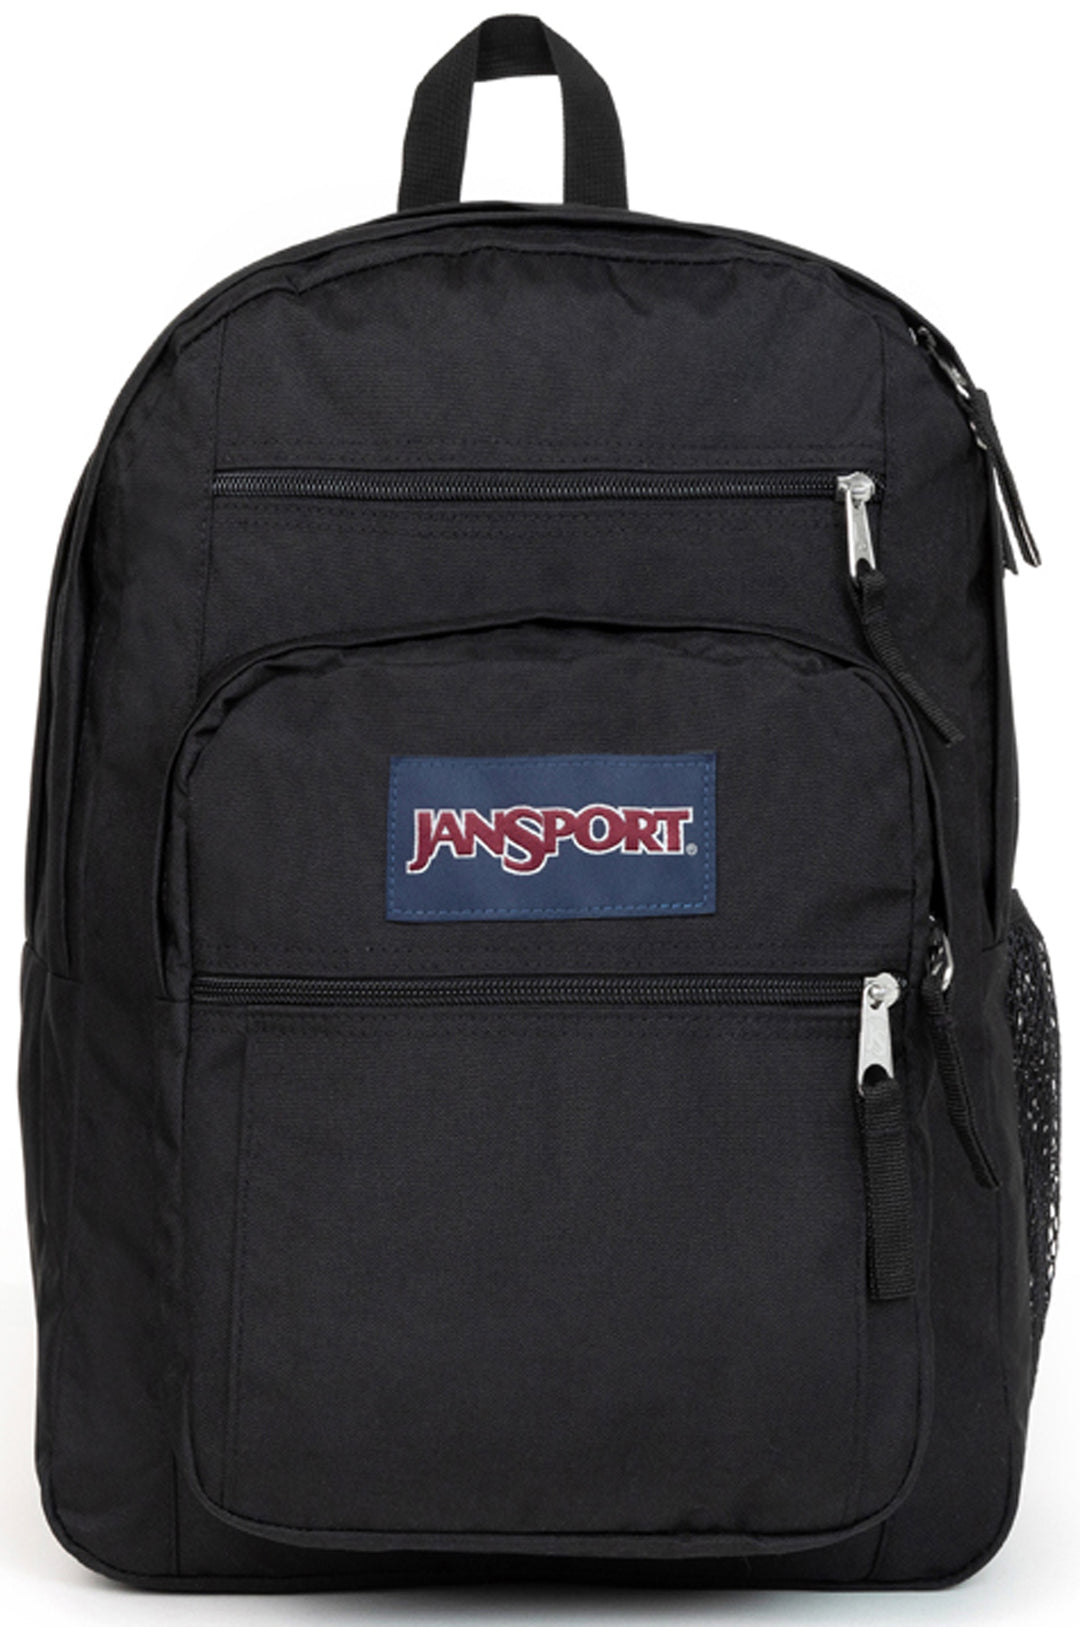 Jansport Big Student Backpack 4feetshoes – Black In